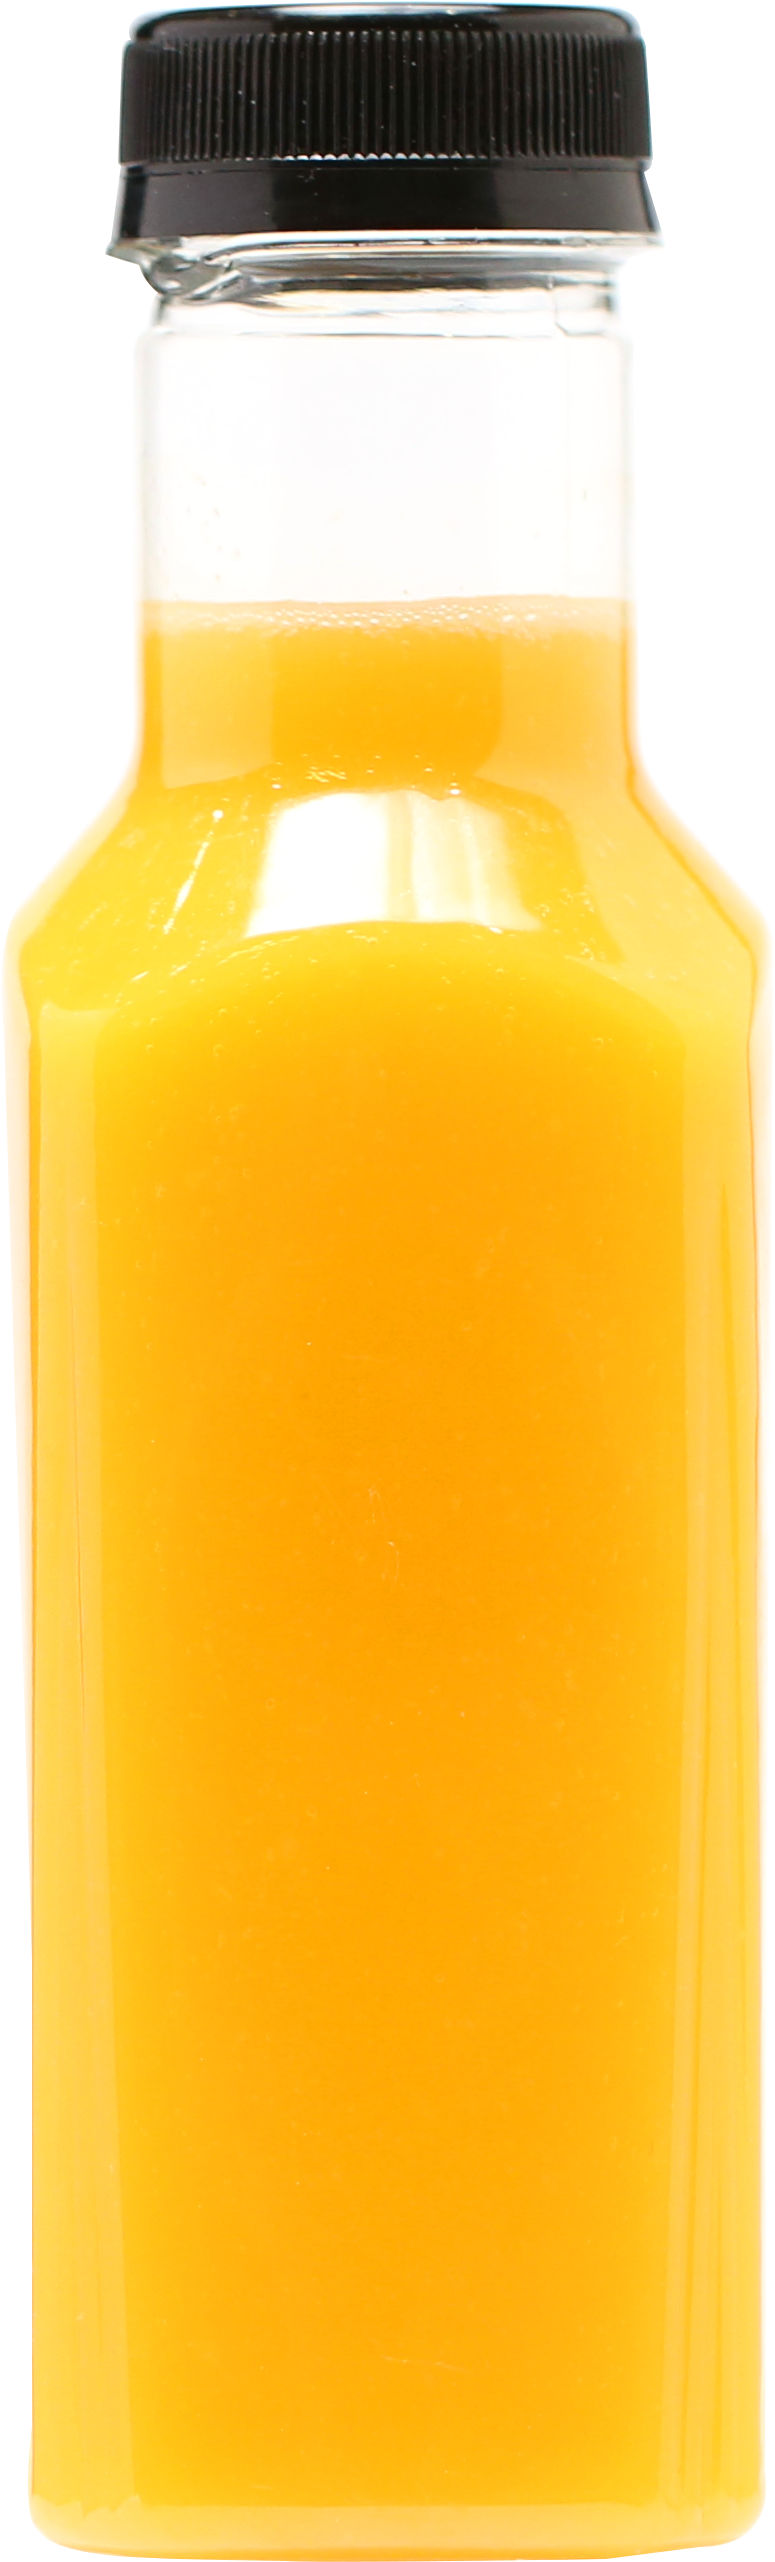 Orange Juice Orange Drink Glass Bottle Liquid - Vegetable Juice (983x2688)